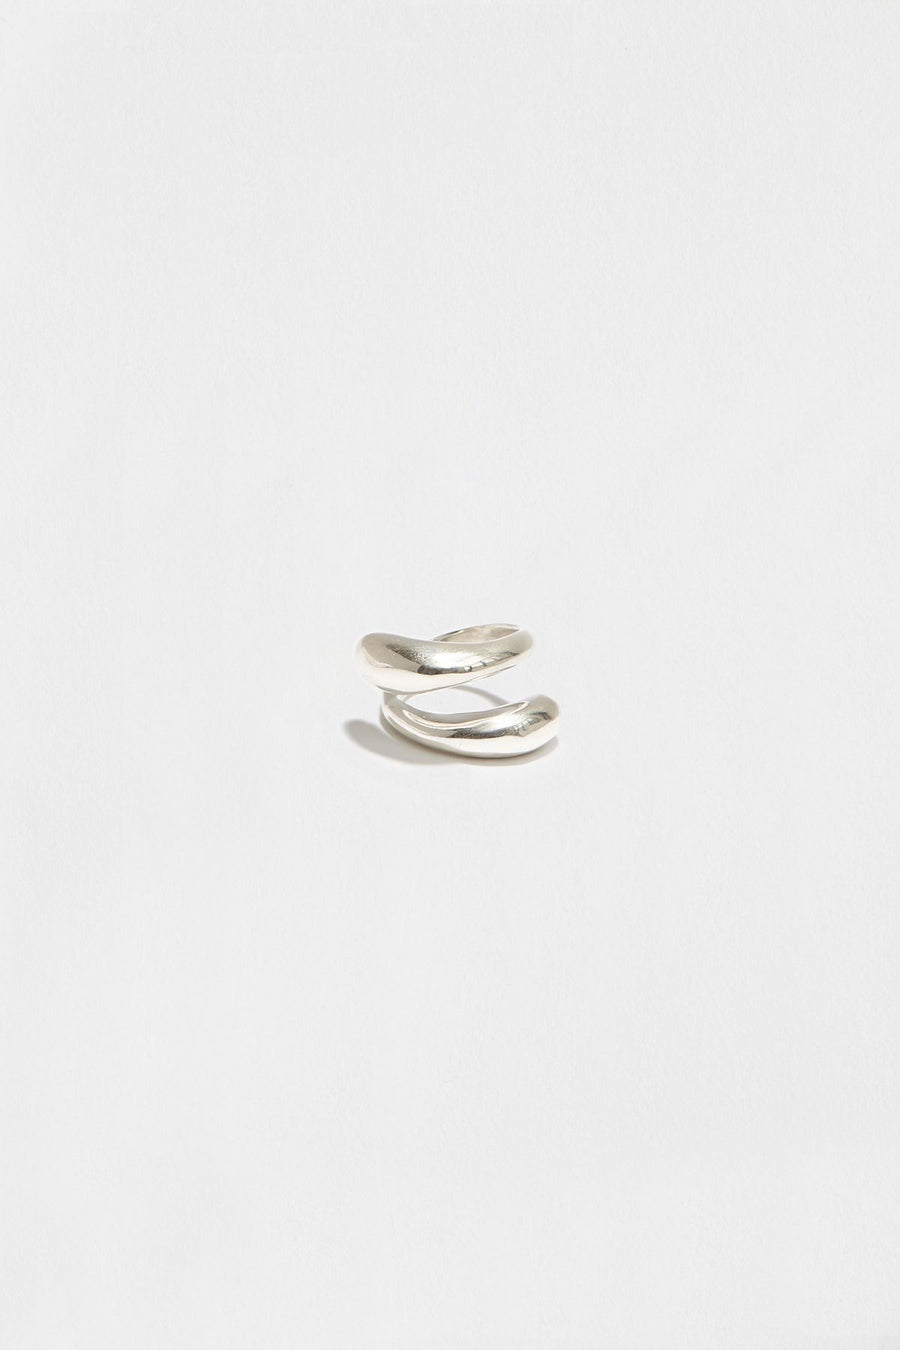 Hernan Herdez- Jewellery-jewelry-Jeryco Store- London- Ring- Sterling silver- unisex- nyc jewellery designer-abrazo ring